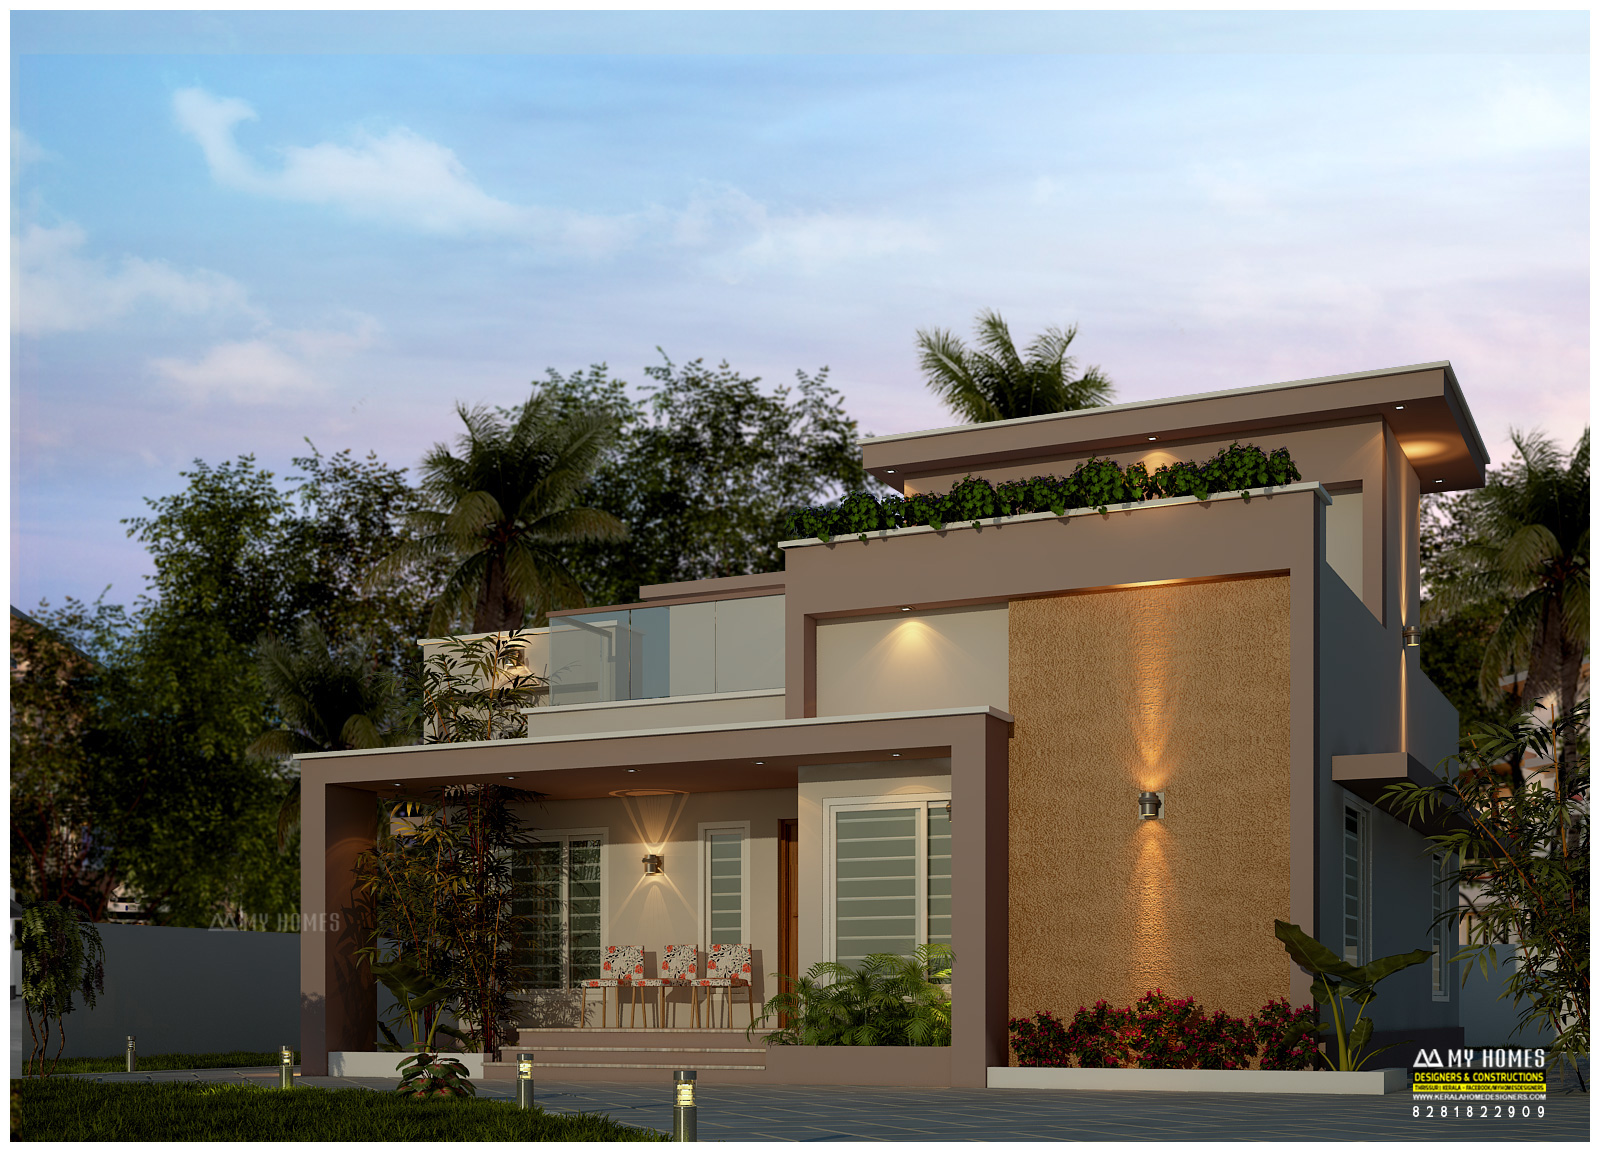 kerala homes designs and plans photos website kerala india